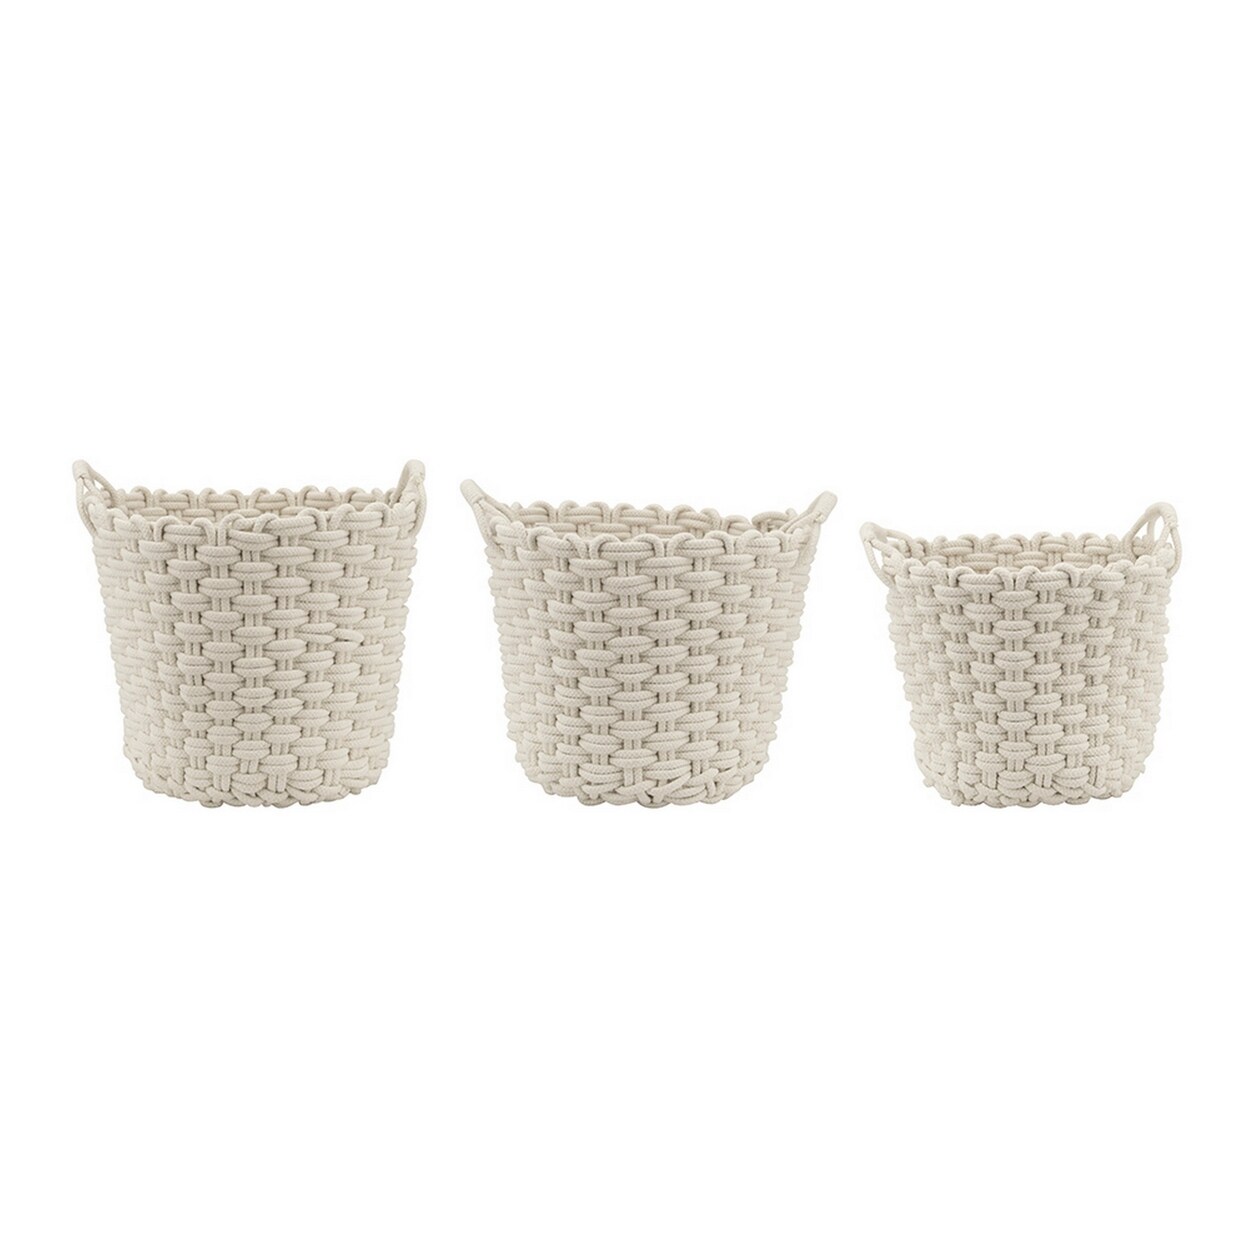 Saltoro Sherpi Set of 3 Baskets, Woven Rope Design, Cotton and